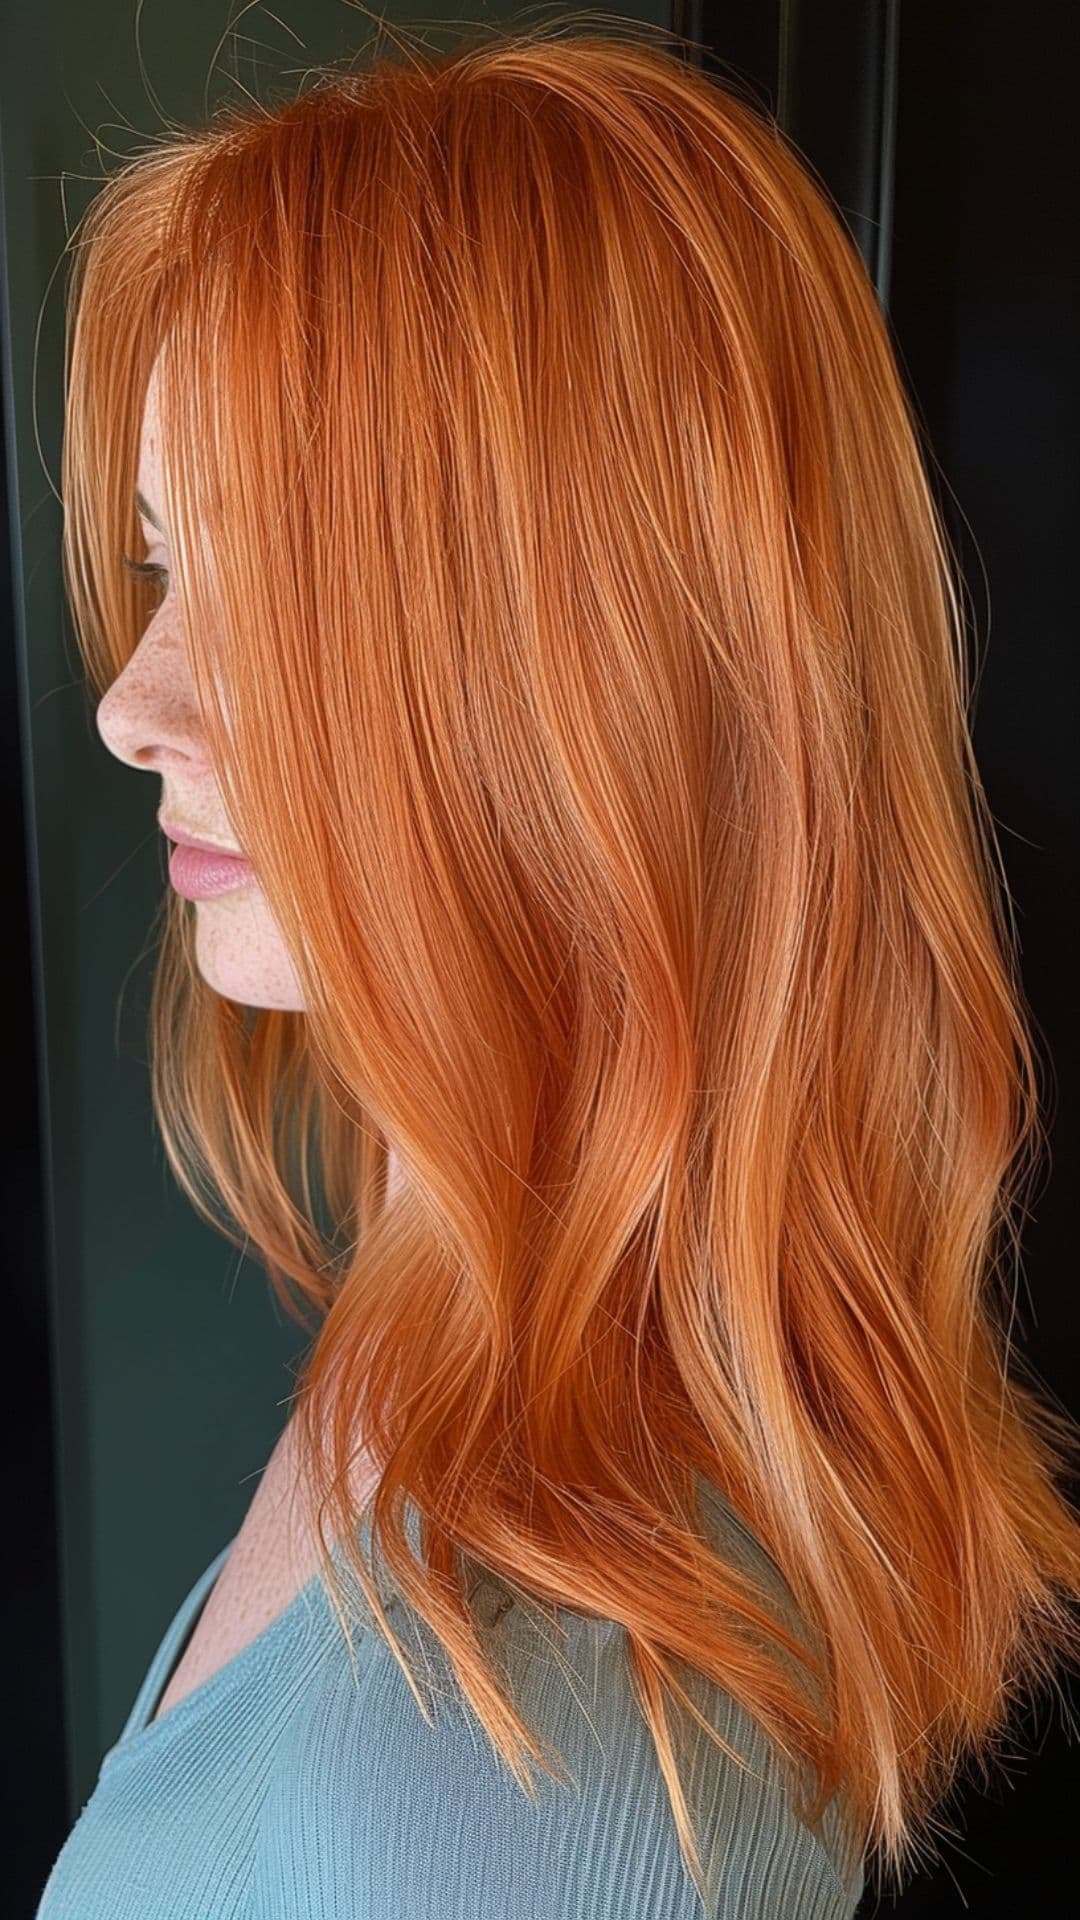 A woman modelling a copper hair.